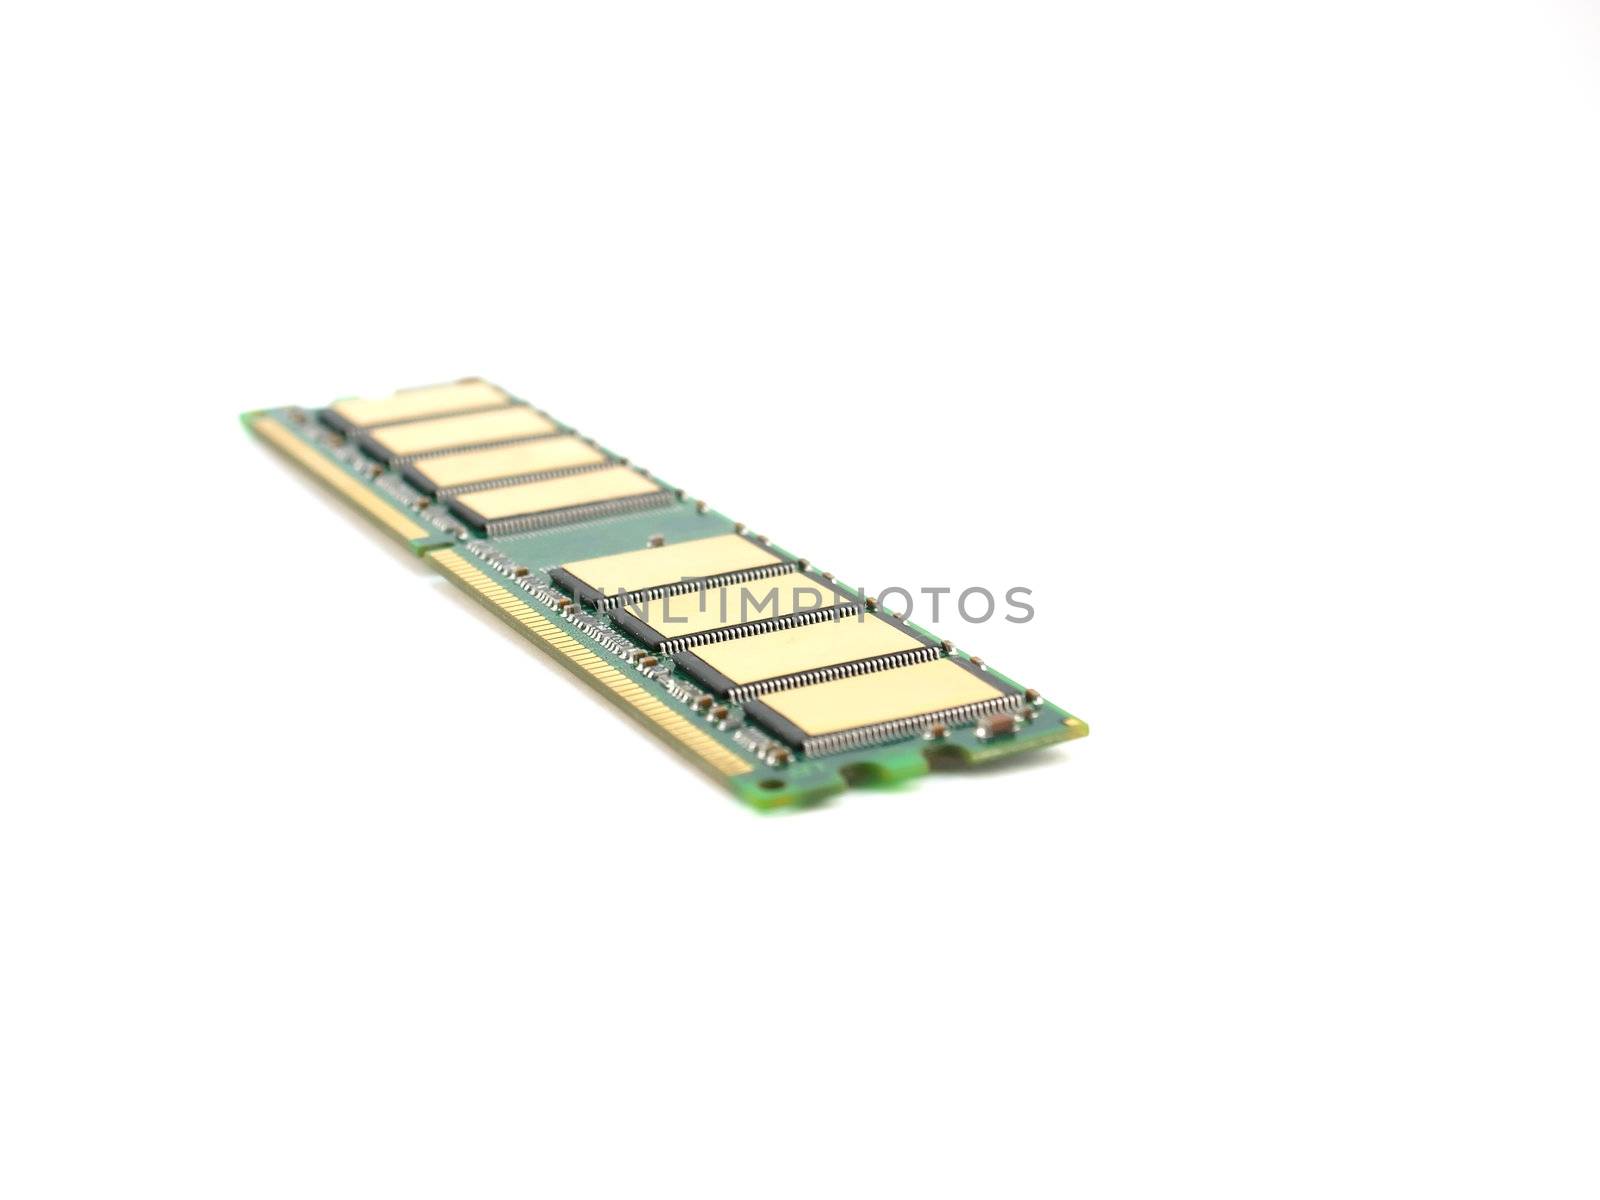 Single memory card (RAM) over white